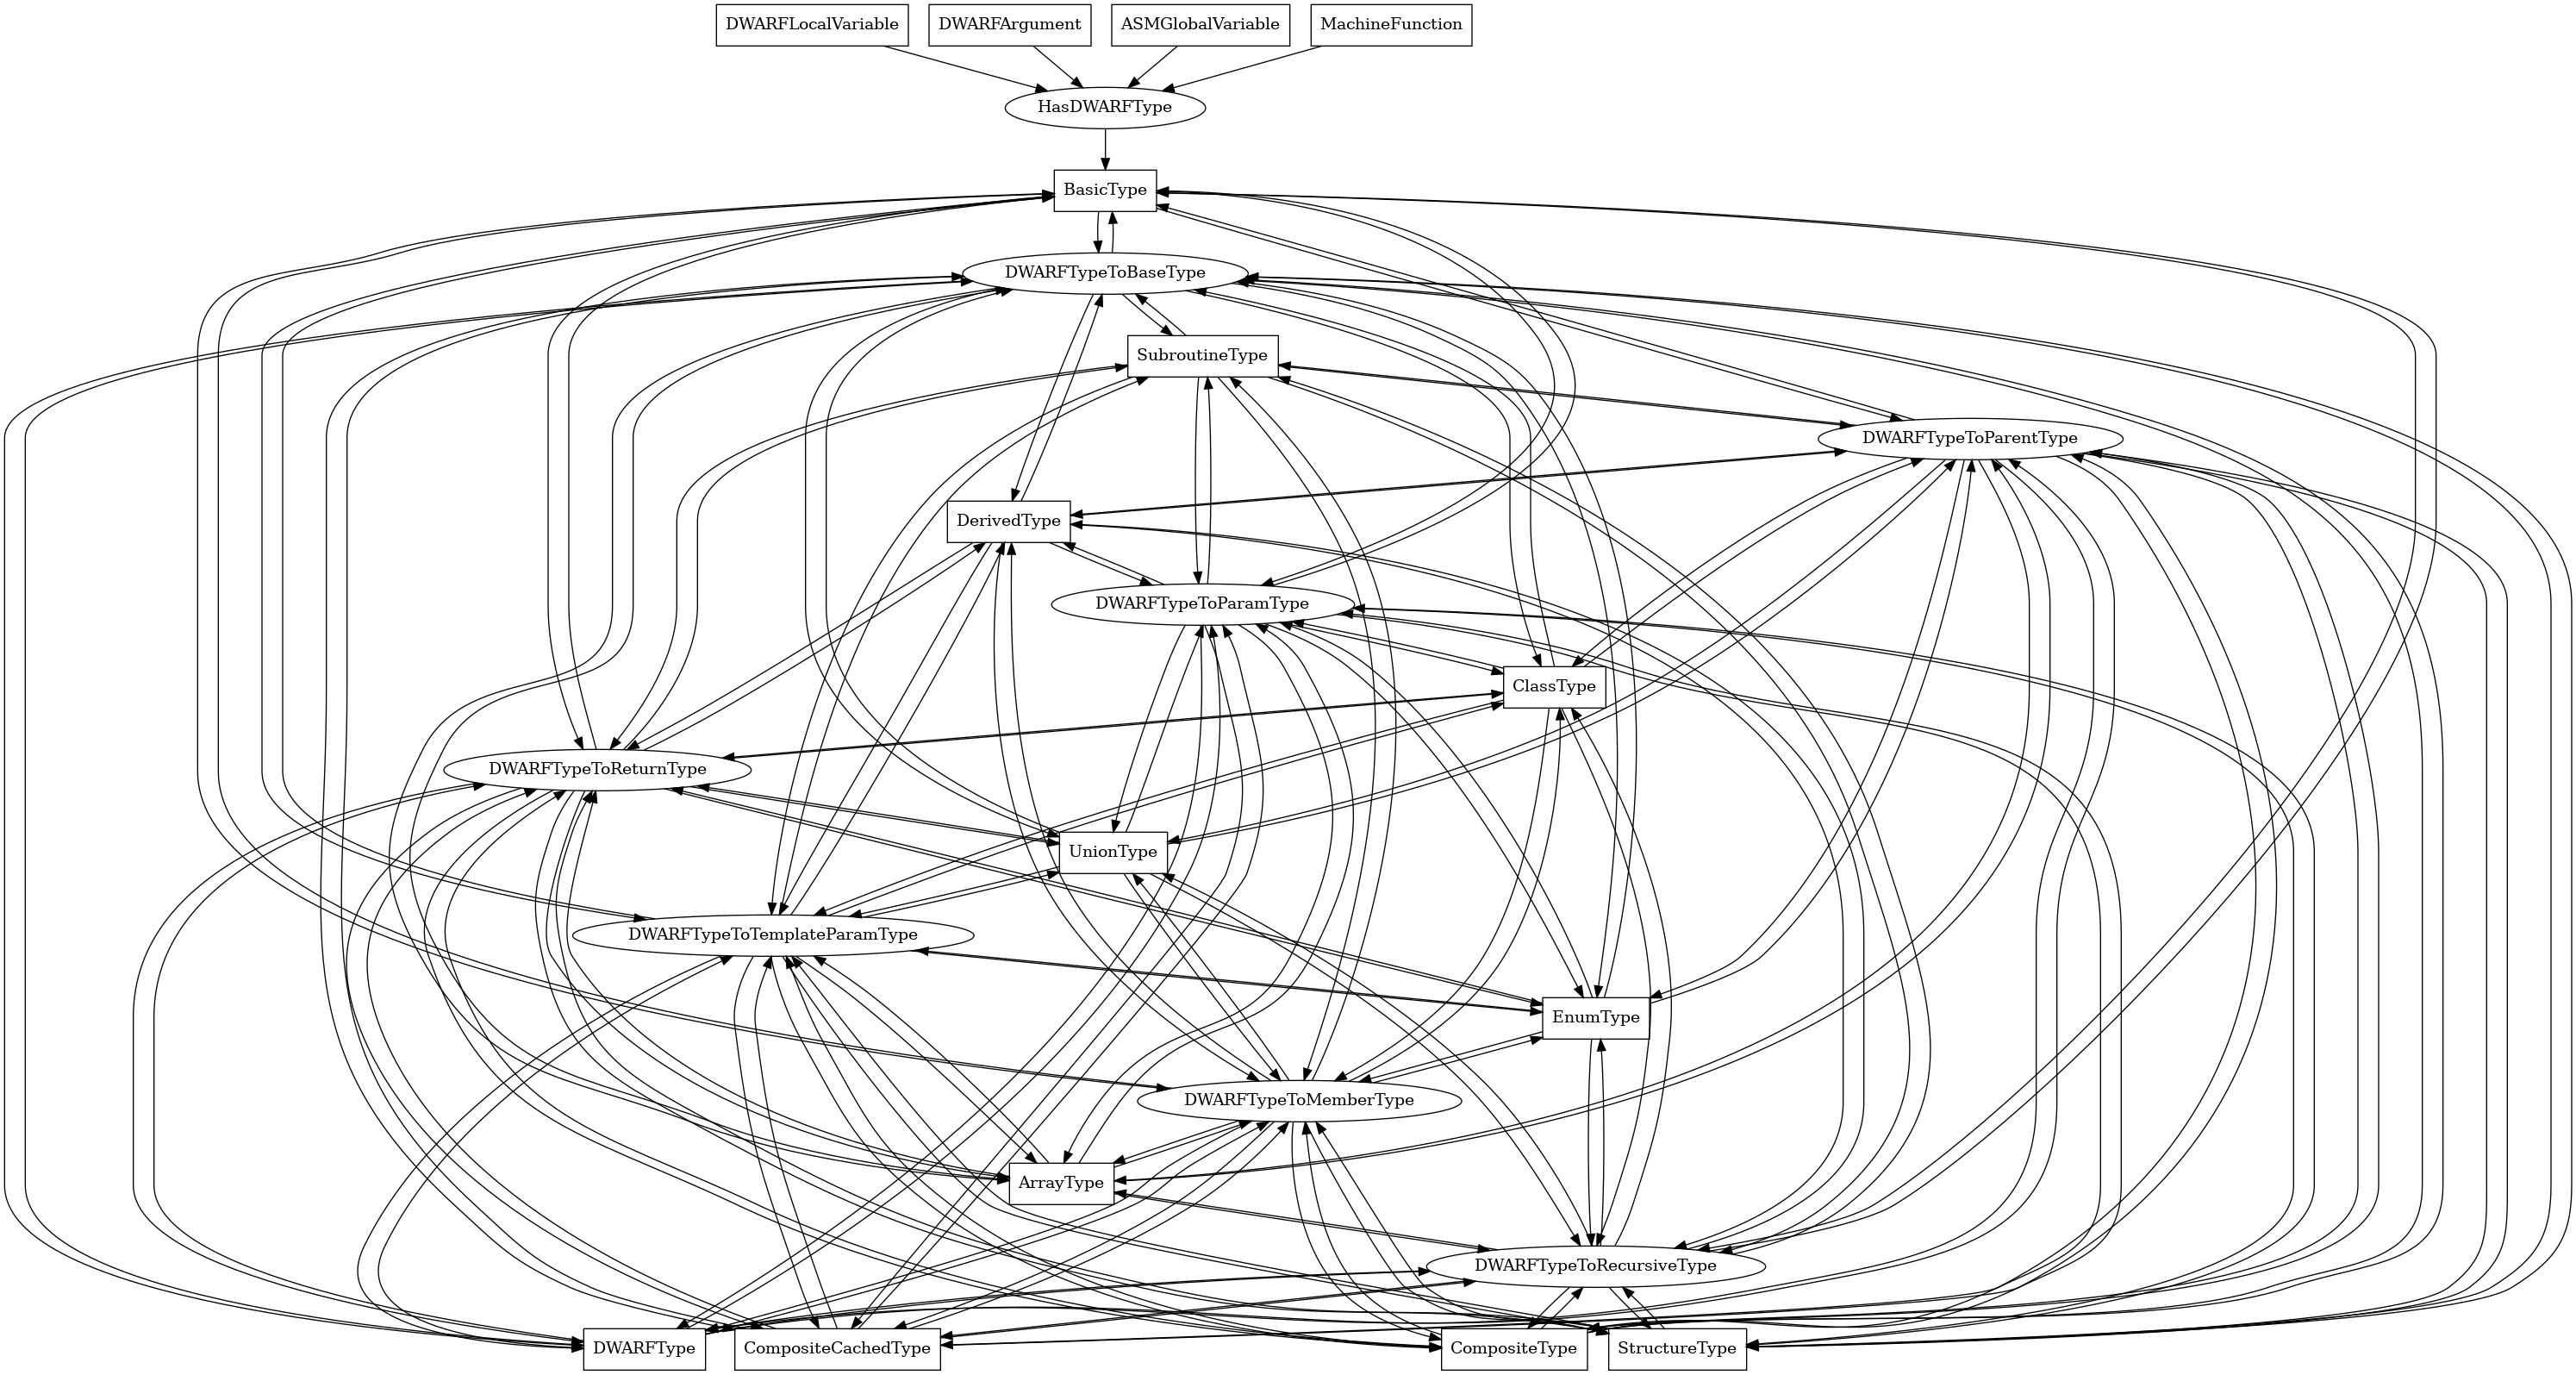 Entity-relationship diagram for BasicType nodes